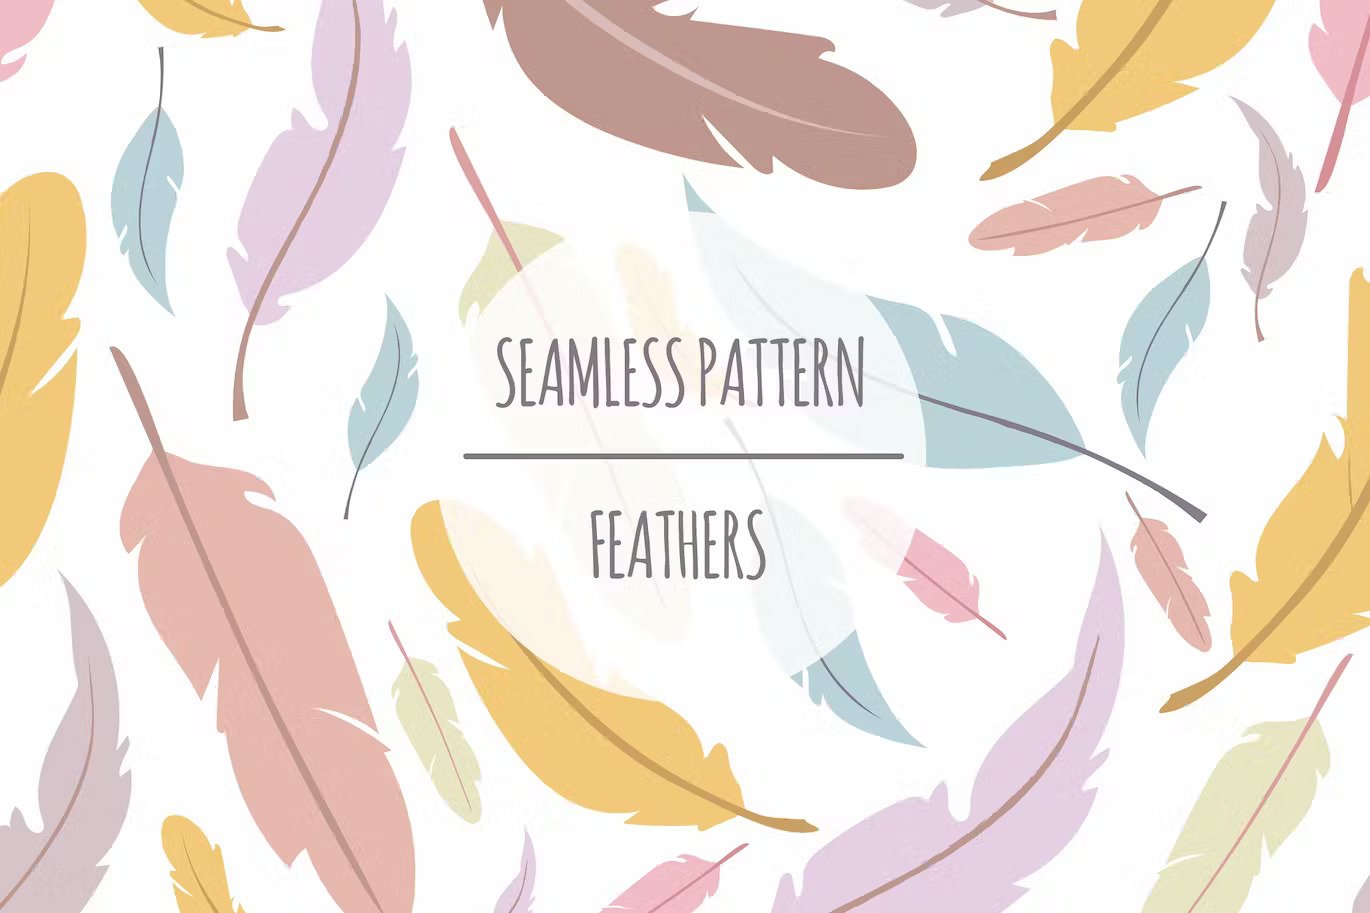 A seamless feathers pattern